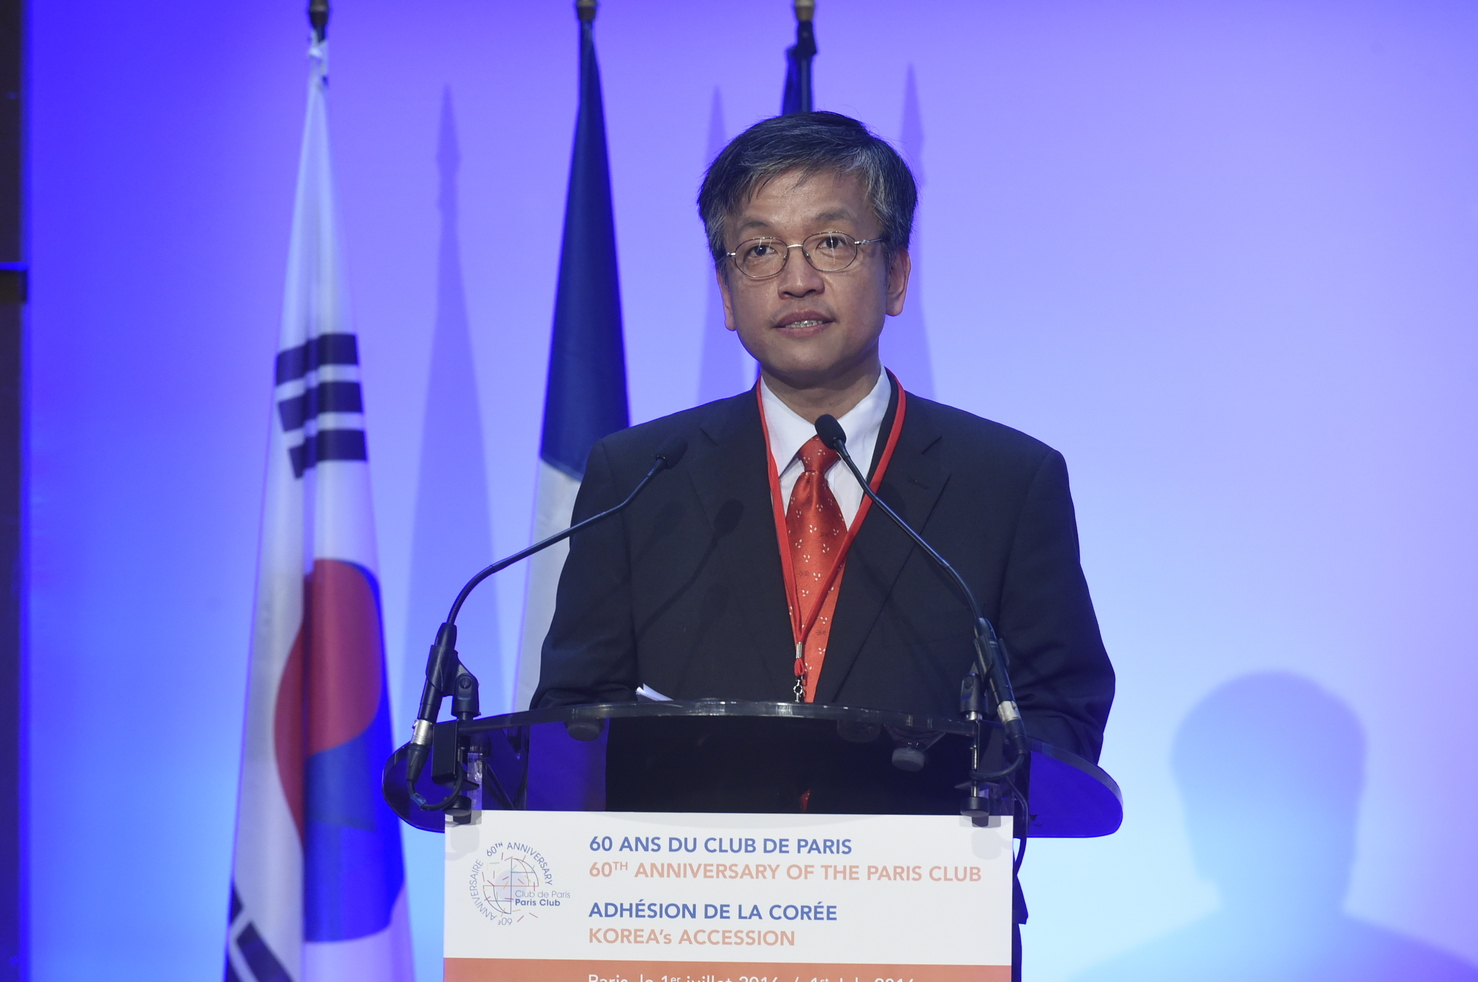 Sang Mok CHOI, Vice-Minister of Strategy and Finance, Korea